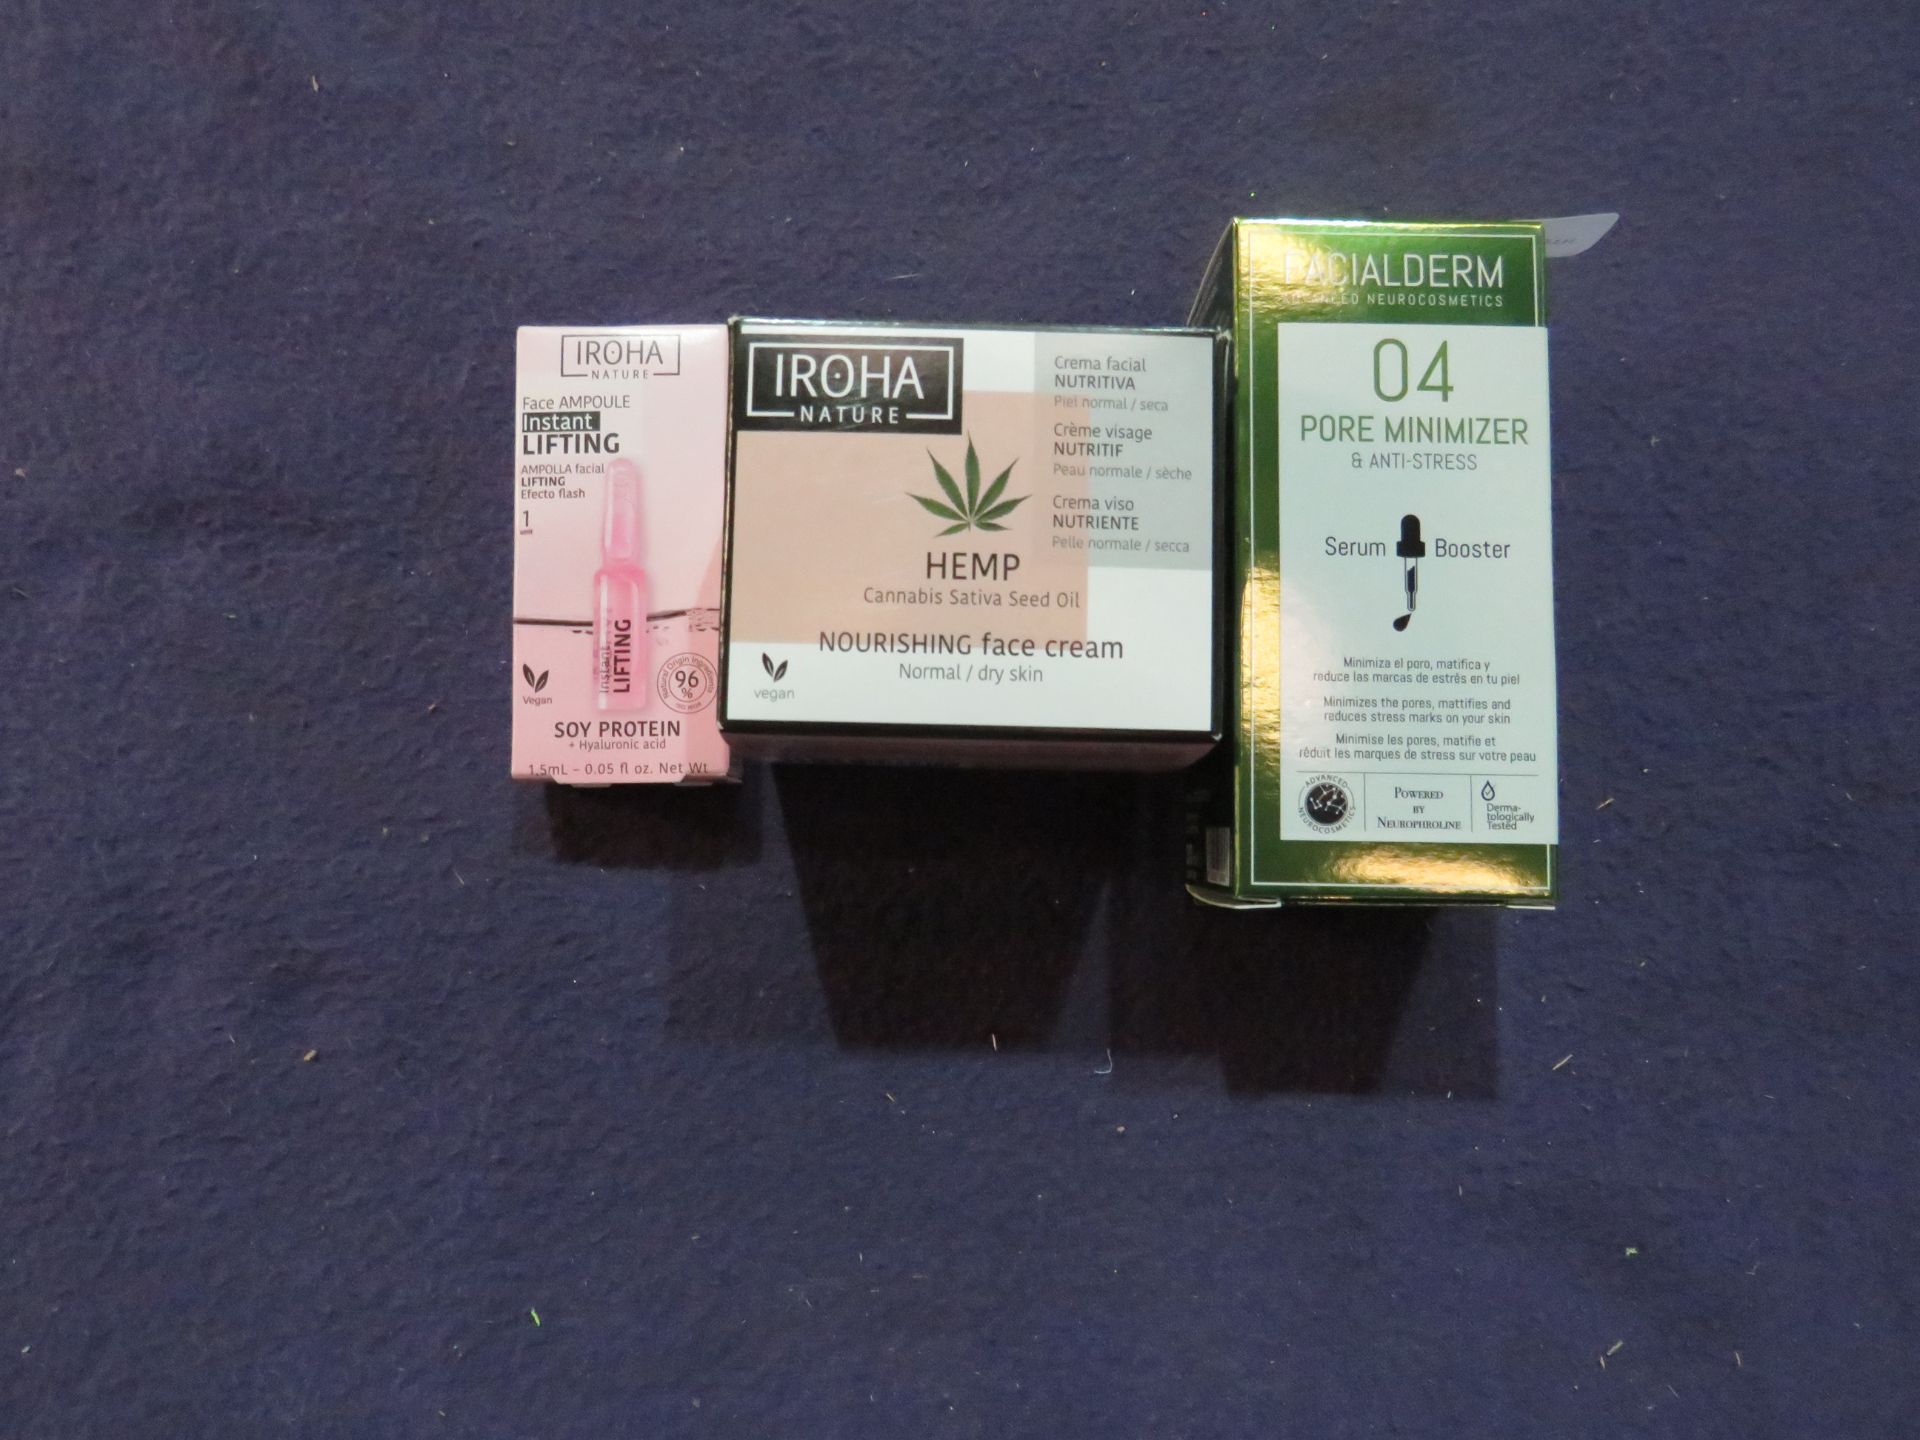 1x Facialderm - 04 Pore Minimizer & Anti-Stress Serum Booster - 30ml - Unused. 1x Iroha - Cannabis